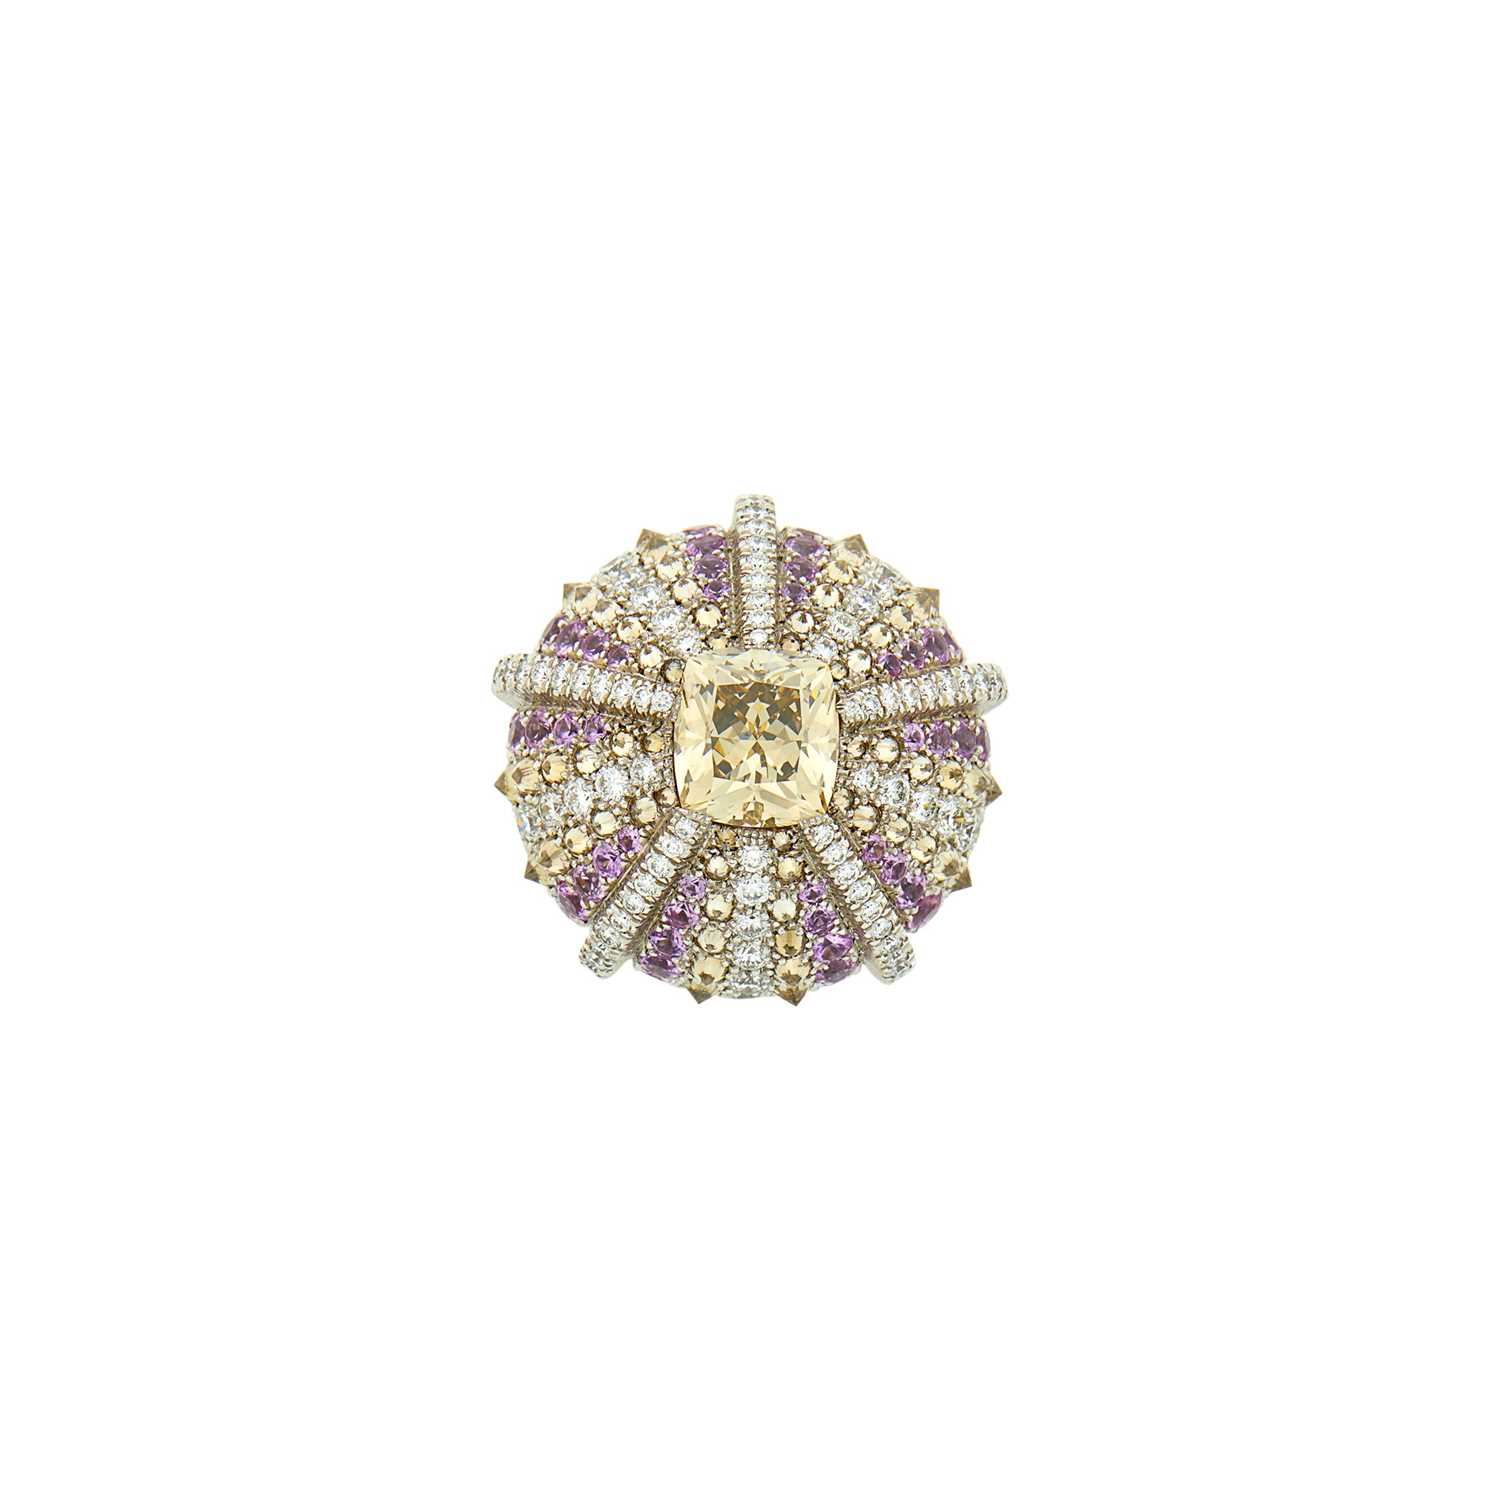 Lot 37 - Lorenz Bäumer Paris White Gold, Colored Diamond, Diamond and Pink Sapphire 'Sea Urchin' Ring